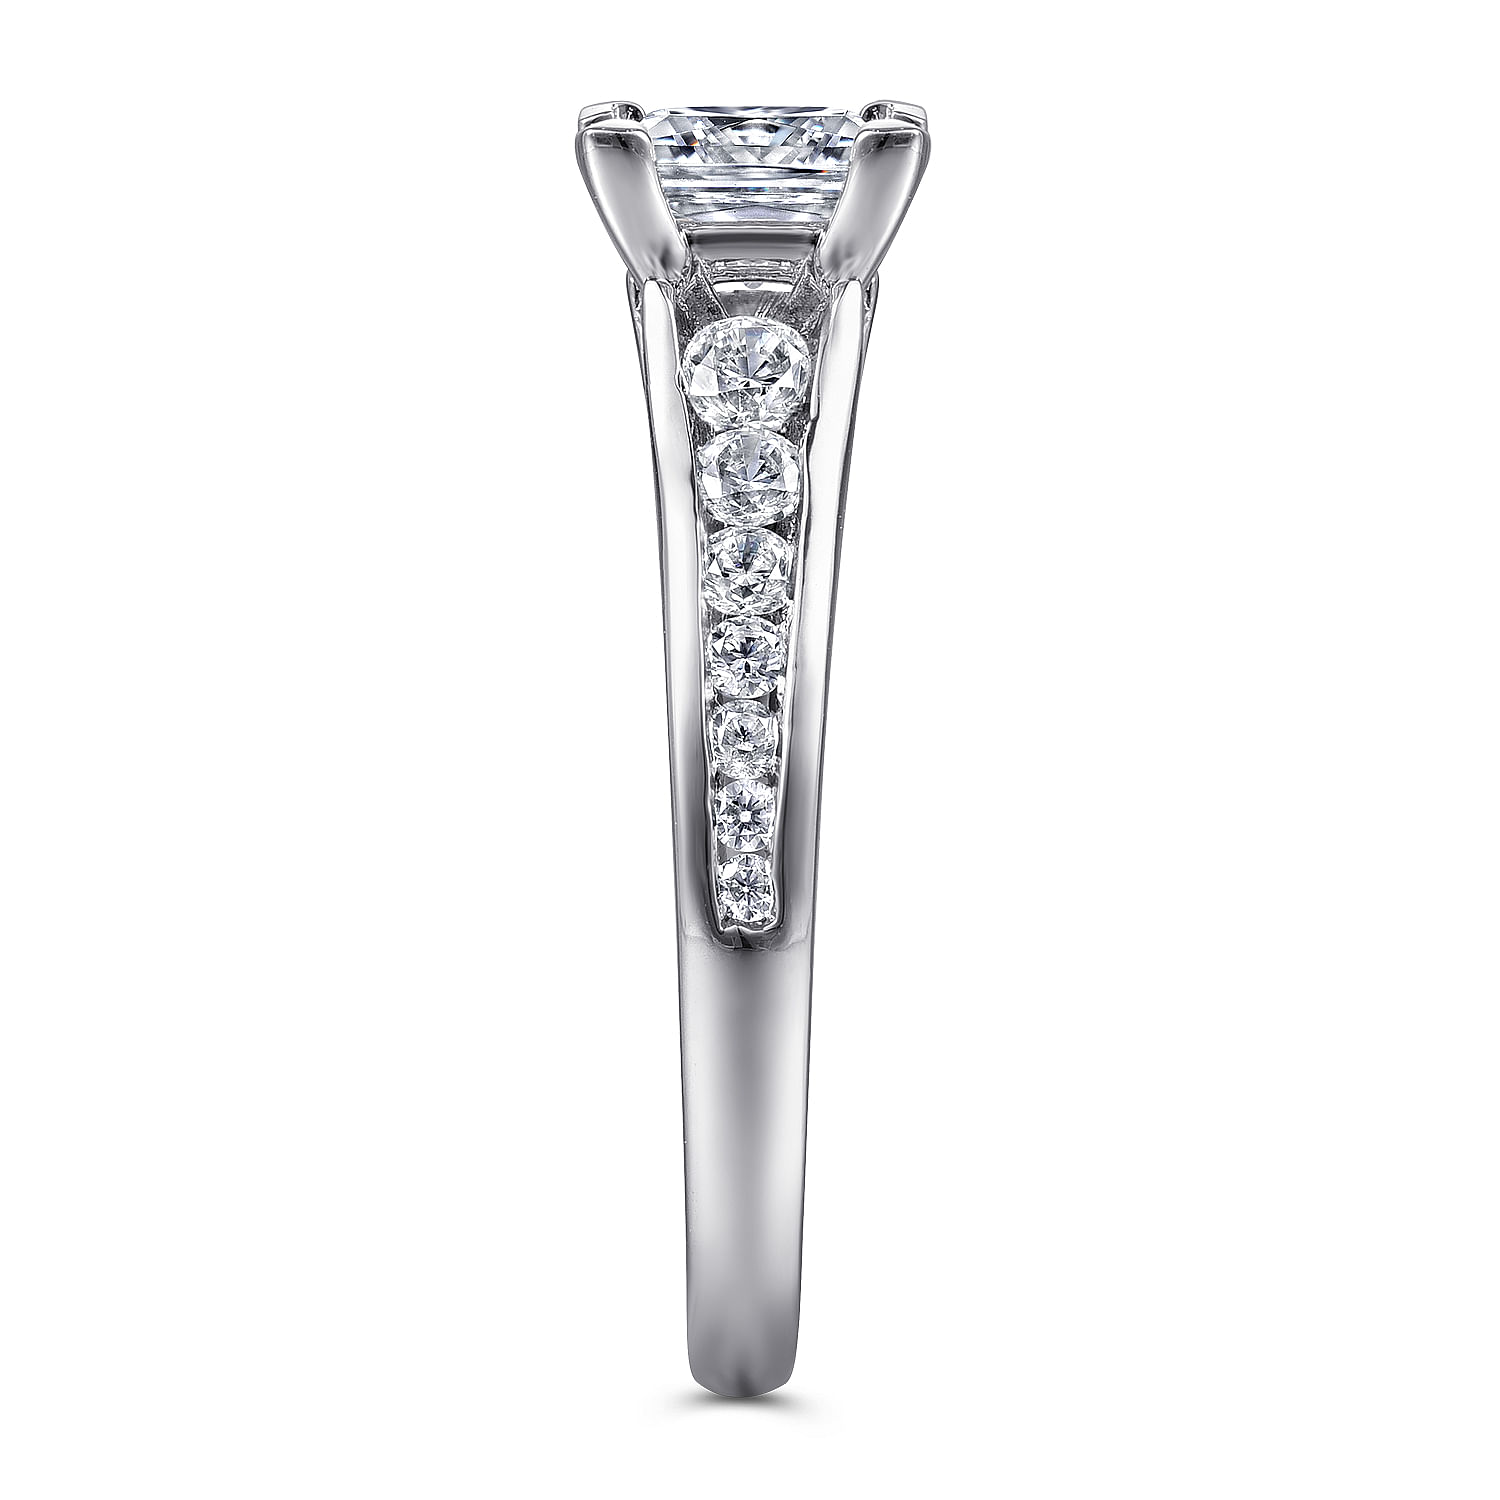 14K White Gold Princess Cut Diamond Channel Set Engagement Ring